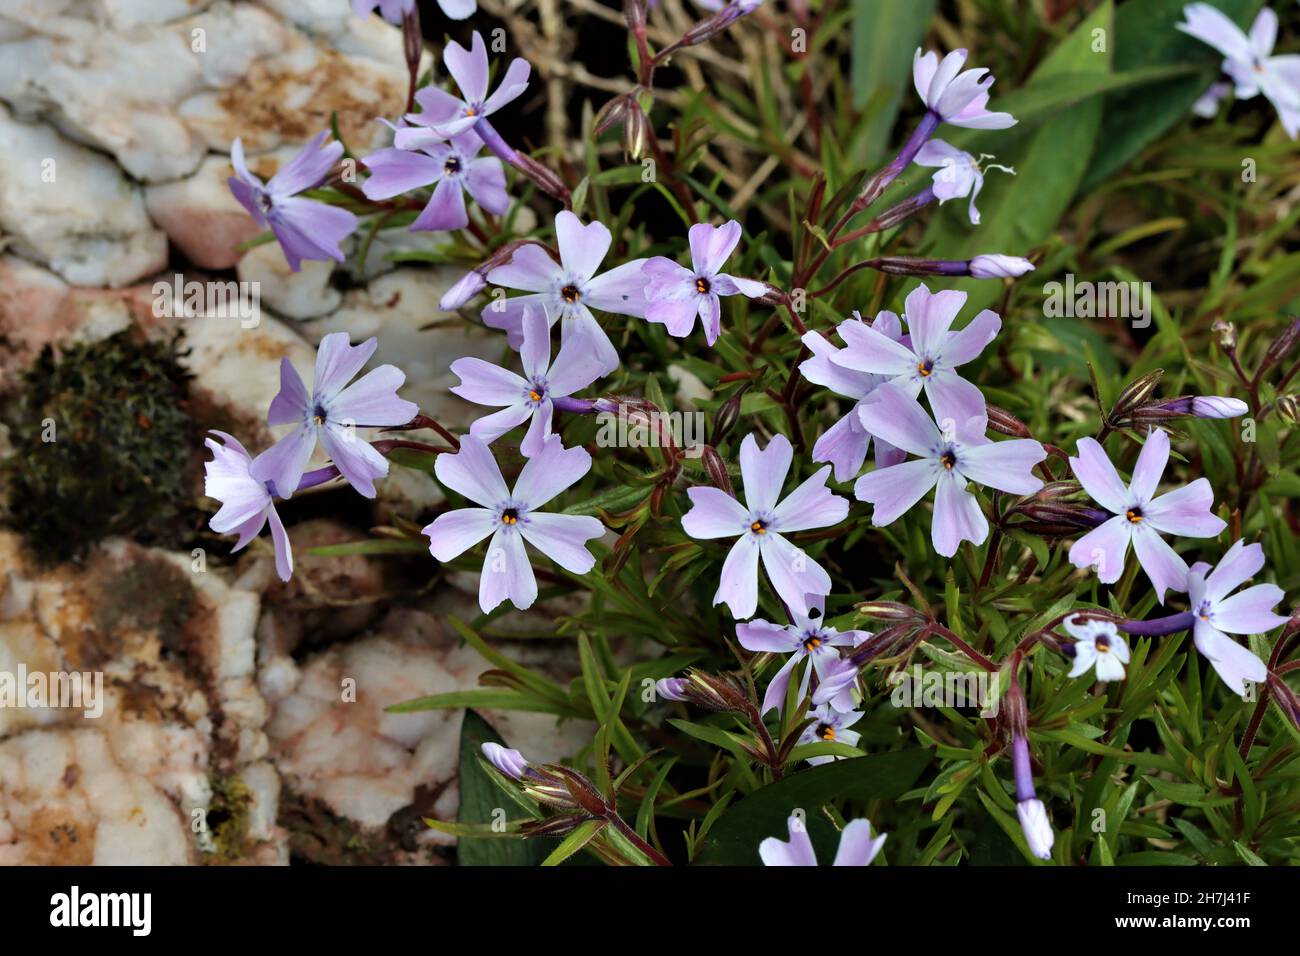 flowers of phlox subulata against a stony background, close-up Stock Photo